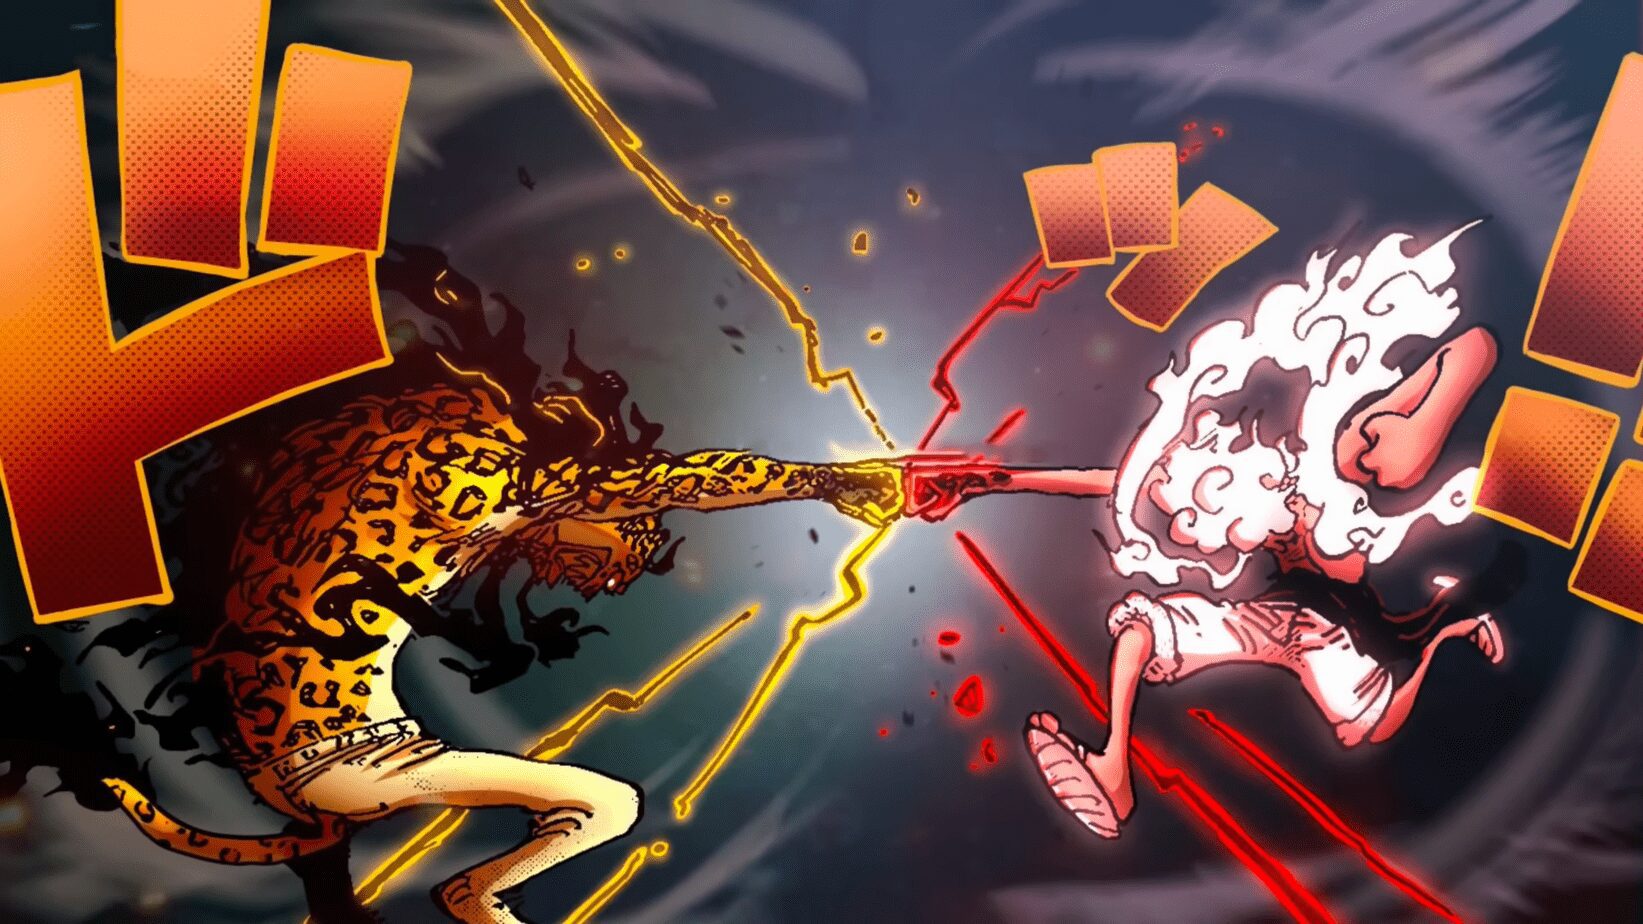 One Piece Chapitre 1070 Spoiler : Luffy combattra 4 Seraphim et Lucci